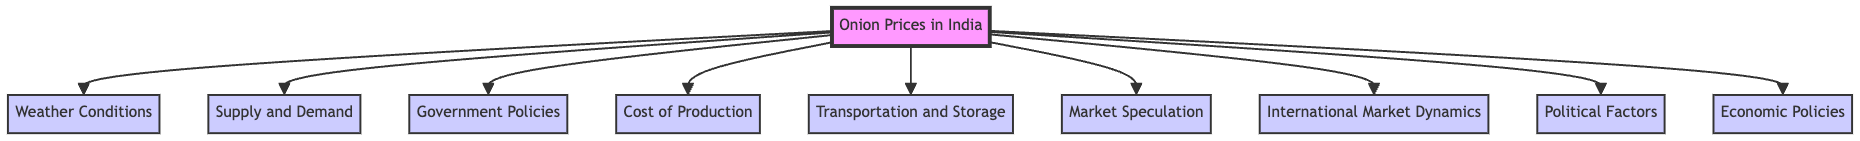 Factors affecting Onion Prices | UPSC | UPSCprep.com